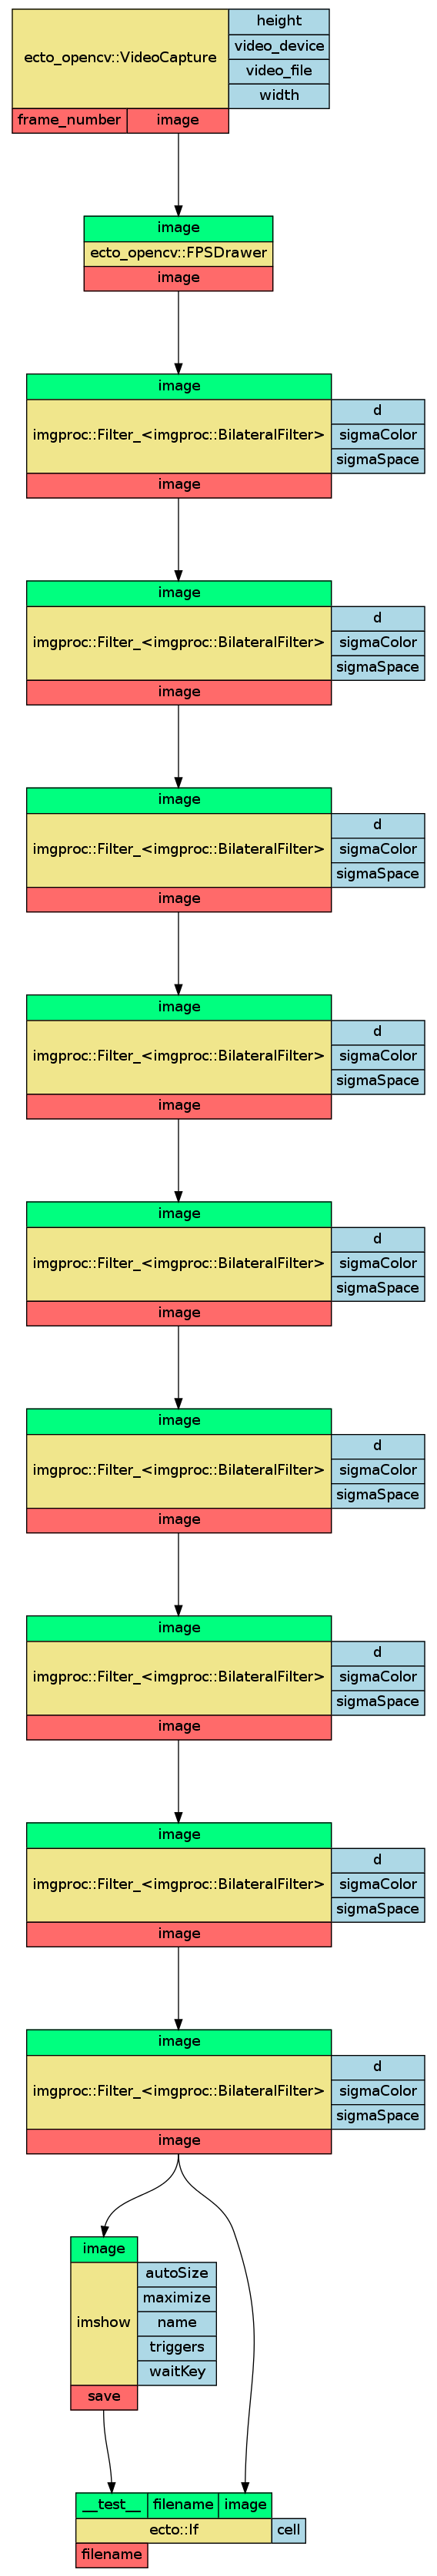 digraph G {
graph [rankdir=TB, ranksep=1]
edge [labelfontsize=8]
node [shape=plaintext]
0[label=<<TABLE BORDER="0" CELLBORDER="1" CELLSPACING="0" CELLPADDING="4"> <TR>
<TD PORT="i_image" BGCOLOR="springgreen">image</TD>
</TR> <TR> <TD ROWSPAN="3" COLSPAN="1" BGCOLOR="khaki">imgproc::Filter_&lt;imgproc::BilateralFilter&gt;</TD> <TD PORT="p_d" BGCOLOR="lightblue">d</TD>
 </TR> <TR> <TD PORT="p_sigmaColor" BGCOLOR="lightblue">sigmaColor</TD> </TR>
<TR> <TD PORT="p_sigmaSpace" BGCOLOR="lightblue">sigmaSpace</TD> </TR>
 <TR>
<TD PORT="o_image" BGCOLOR="indianred1">image</TD>
</TR> </TABLE>>];
1[label=<<TABLE BORDER="0" CELLBORDER="1" CELLSPACING="0" CELLPADDING="4"> <TR>
<TD PORT="i_image" BGCOLOR="springgreen">image</TD>
</TR> <TR> <TD ROWSPAN="3" COLSPAN="1" BGCOLOR="khaki">imgproc::Filter_&lt;imgproc::BilateralFilter&gt;</TD> <TD PORT="p_d" BGCOLOR="lightblue">d</TD>
 </TR> <TR> <TD PORT="p_sigmaColor" BGCOLOR="lightblue">sigmaColor</TD> </TR>
<TR> <TD PORT="p_sigmaSpace" BGCOLOR="lightblue">sigmaSpace</TD> </TR>
 <TR>
<TD PORT="o_image" BGCOLOR="indianred1">image</TD>
</TR> </TABLE>>];
2[label=<<TABLE BORDER="0" CELLBORDER="1" CELLSPACING="0" CELLPADDING="4"> <TR>
<TD PORT="i_image" BGCOLOR="springgreen">image</TD>
</TR> <TR> <TD ROWSPAN="3" COLSPAN="1" BGCOLOR="khaki">imgproc::Filter_&lt;imgproc::BilateralFilter&gt;</TD> <TD PORT="p_d" BGCOLOR="lightblue">d</TD>
 </TR> <TR> <TD PORT="p_sigmaColor" BGCOLOR="lightblue">sigmaColor</TD> </TR>
<TR> <TD PORT="p_sigmaSpace" BGCOLOR="lightblue">sigmaSpace</TD> </TR>
 <TR>
<TD PORT="o_image" BGCOLOR="indianred1">image</TD>
</TR> </TABLE>>];
3[label=<<TABLE BORDER="0" CELLBORDER="1" CELLSPACING="0" CELLPADDING="4"> <TR>
<TD PORT="i_image" BGCOLOR="springgreen">image</TD>
</TR> <TR> <TD ROWSPAN="3" COLSPAN="1" BGCOLOR="khaki">imgproc::Filter_&lt;imgproc::BilateralFilter&gt;</TD> <TD PORT="p_d" BGCOLOR="lightblue">d</TD>
 </TR> <TR> <TD PORT="p_sigmaColor" BGCOLOR="lightblue">sigmaColor</TD> </TR>
<TR> <TD PORT="p_sigmaSpace" BGCOLOR="lightblue">sigmaSpace</TD> </TR>
 <TR>
<TD PORT="o_image" BGCOLOR="indianred1">image</TD>
</TR> </TABLE>>];
4[label=<<TABLE BORDER="0" CELLBORDER="1" CELLSPACING="0" CELLPADDING="4"> <TR>
<TD PORT="i_image" BGCOLOR="springgreen">image</TD>
</TR> <TR> <TD ROWSPAN="3" COLSPAN="1" BGCOLOR="khaki">imgproc::Filter_&lt;imgproc::BilateralFilter&gt;</TD> <TD PORT="p_d" BGCOLOR="lightblue">d</TD>
 </TR> <TR> <TD PORT="p_sigmaColor" BGCOLOR="lightblue">sigmaColor</TD> </TR>
<TR> <TD PORT="p_sigmaSpace" BGCOLOR="lightblue">sigmaSpace</TD> </TR>
 <TR>
<TD PORT="o_image" BGCOLOR="indianred1">image</TD>
</TR> </TABLE>>];
5[label=<<TABLE BORDER="0" CELLBORDER="1" CELLSPACING="0" CELLPADDING="4"> <TR>
<TD PORT="i_image" BGCOLOR="springgreen">image</TD>
</TR> <TR> <TD ROWSPAN="3" COLSPAN="1" BGCOLOR="khaki">imgproc::Filter_&lt;imgproc::BilateralFilter&gt;</TD> <TD PORT="p_d" BGCOLOR="lightblue">d</TD>
 </TR> <TR> <TD PORT="p_sigmaColor" BGCOLOR="lightblue">sigmaColor</TD> </TR>
<TR> <TD PORT="p_sigmaSpace" BGCOLOR="lightblue">sigmaSpace</TD> </TR>
 <TR>
<TD PORT="o_image" BGCOLOR="indianred1">image</TD>
</TR> </TABLE>>];
6[label=<<TABLE BORDER="0" CELLBORDER="1" CELLSPACING="0" CELLPADDING="4"> <TR>
<TD PORT="i_image" BGCOLOR="springgreen">image</TD>
</TR> <TR> <TD ROWSPAN="3" COLSPAN="1" BGCOLOR="khaki">imgproc::Filter_&lt;imgproc::BilateralFilter&gt;</TD> <TD PORT="p_d" BGCOLOR="lightblue">d</TD>
 </TR> <TR> <TD PORT="p_sigmaColor" BGCOLOR="lightblue">sigmaColor</TD> </TR>
<TR> <TD PORT="p_sigmaSpace" BGCOLOR="lightblue">sigmaSpace</TD> </TR>
 <TR>
<TD PORT="o_image" BGCOLOR="indianred1">image</TD>
</TR> </TABLE>>];
7[label=<<TABLE BORDER="0" CELLBORDER="1" CELLSPACING="0" CELLPADDING="4"> <TR>
<TD PORT="i_image" BGCOLOR="springgreen">image</TD>
</TR> <TR> <TD ROWSPAN="3" COLSPAN="1" BGCOLOR="khaki">imgproc::Filter_&lt;imgproc::BilateralFilter&gt;</TD> <TD PORT="p_d" BGCOLOR="lightblue">d</TD>
 </TR> <TR> <TD PORT="p_sigmaColor" BGCOLOR="lightblue">sigmaColor</TD> </TR>
<TR> <TD PORT="p_sigmaSpace" BGCOLOR="lightblue">sigmaSpace</TD> </TR>
 <TR>
<TD PORT="o_image" BGCOLOR="indianred1">image</TD>
</TR> </TABLE>>];
8[label=<<TABLE BORDER="0" CELLBORDER="1" CELLSPACING="0" CELLPADDING="4"> <TR>
<TD PORT="i_image" BGCOLOR="springgreen">image</TD>
</TR> <TR> <TD ROWSPAN="3" COLSPAN="1" BGCOLOR="khaki">imgproc::Filter_&lt;imgproc::BilateralFilter&gt;</TD> <TD PORT="p_d" BGCOLOR="lightblue">d</TD>
 </TR> <TR> <TD PORT="p_sigmaColor" BGCOLOR="lightblue">sigmaColor</TD> </TR>
<TR> <TD PORT="p_sigmaSpace" BGCOLOR="lightblue">sigmaSpace</TD> </TR>
 <TR>
<TD PORT="o_image" BGCOLOR="indianred1">image</TD>
</TR> </TABLE>>];
9[label=<<TABLE BORDER="0" CELLBORDER="1" CELLSPACING="0" CELLPADDING="4">  <TR> <TD ROWSPAN="4" COLSPAN="2" BGCOLOR="khaki">ecto_opencv::VideoCapture</TD> <TD PORT="p_height" BGCOLOR="lightblue">height</TD>
 </TR> <TR> <TD PORT="p_video_device" BGCOLOR="lightblue">video_device</TD> </TR>
<TR> <TD PORT="p_video_file" BGCOLOR="lightblue">video_file</TD> </TR>
<TR> <TD PORT="p_width" BGCOLOR="lightblue">width</TD> </TR>
 <TR>
<TD PORT="o_frame_number" BGCOLOR="indianred1">frame_number</TD>
<TD PORT="o_image" BGCOLOR="indianred1">image</TD>
</TR> </TABLE>>];
10[label=<<TABLE BORDER="0" CELLBORDER="1" CELLSPACING="0" CELLPADDING="4"> <TR>
<TD PORT="i_image" BGCOLOR="springgreen">image</TD>
</TR> <TR> <TD ROWSPAN="1" COLSPAN="1" BGCOLOR="khaki">ecto_opencv::FPSDrawer</TD>  </TR>  <TR>
<TD PORT="o_image" BGCOLOR="indianred1">image</TD>
</TR> </TABLE>>];
11[label=<<TABLE BORDER="0" CELLBORDER="1" CELLSPACING="0" CELLPADDING="4"> <TR>
<TD PORT="i_image" BGCOLOR="springgreen">image</TD>
</TR> <TR> <TD ROWSPAN="5" COLSPAN="1" BGCOLOR="khaki">imshow</TD> <TD PORT="p_autoSize" BGCOLOR="lightblue">autoSize</TD>
 </TR> <TR> <TD PORT="p_maximize" BGCOLOR="lightblue">maximize</TD> </TR>
<TR> <TD PORT="p_name" BGCOLOR="lightblue">name</TD> </TR>
<TR> <TD PORT="p_triggers" BGCOLOR="lightblue">triggers</TD> </TR>
<TR> <TD PORT="p_waitKey" BGCOLOR="lightblue">waitKey</TD> </TR>
 <TR>
<TD PORT="o_save" BGCOLOR="indianred1">save</TD>
</TR> </TABLE>>];
12[label=<<TABLE BORDER="0" CELLBORDER="1" CELLSPACING="0" CELLPADDING="4"> <TR>
<TD PORT="i___test__" BGCOLOR="springgreen">__test__</TD>
<TD PORT="i_filename" BGCOLOR="springgreen">filename</TD>
<TD PORT="i_image" BGCOLOR="springgreen">image</TD>
</TR> <TR> <TD ROWSPAN="1" COLSPAN="3" BGCOLOR="khaki">ecto::If</TD> <TD PORT="p_cell" BGCOLOR="lightblue">cell</TD>
 </TR>  <TR>
<TD PORT="o_filename" BGCOLOR="indianred1">filename</TD>
</TR> </TABLE>>];
0->1 [headport="i_image" tailport="o_image"];
1->2 [headport="i_image" tailport="o_image"];
2->3 [headport="i_image" tailport="o_image"];
3->4 [headport="i_image" tailport="o_image"];
4->5 [headport="i_image" tailport="o_image"];
5->6 [headport="i_image" tailport="o_image"];
6->7 [headport="i_image" tailport="o_image"];
7->8 [headport="i_image" tailport="o_image"];
9->10 [headport="i_image" tailport="o_image"];
10->0 [headport="i_image" tailport="o_image"];
8->11 [headport="i_image" tailport="o_image"];
8->12 [headport="i_image" tailport="o_image"];
11->12 [headport="i___test__" tailport="o_save"];
}